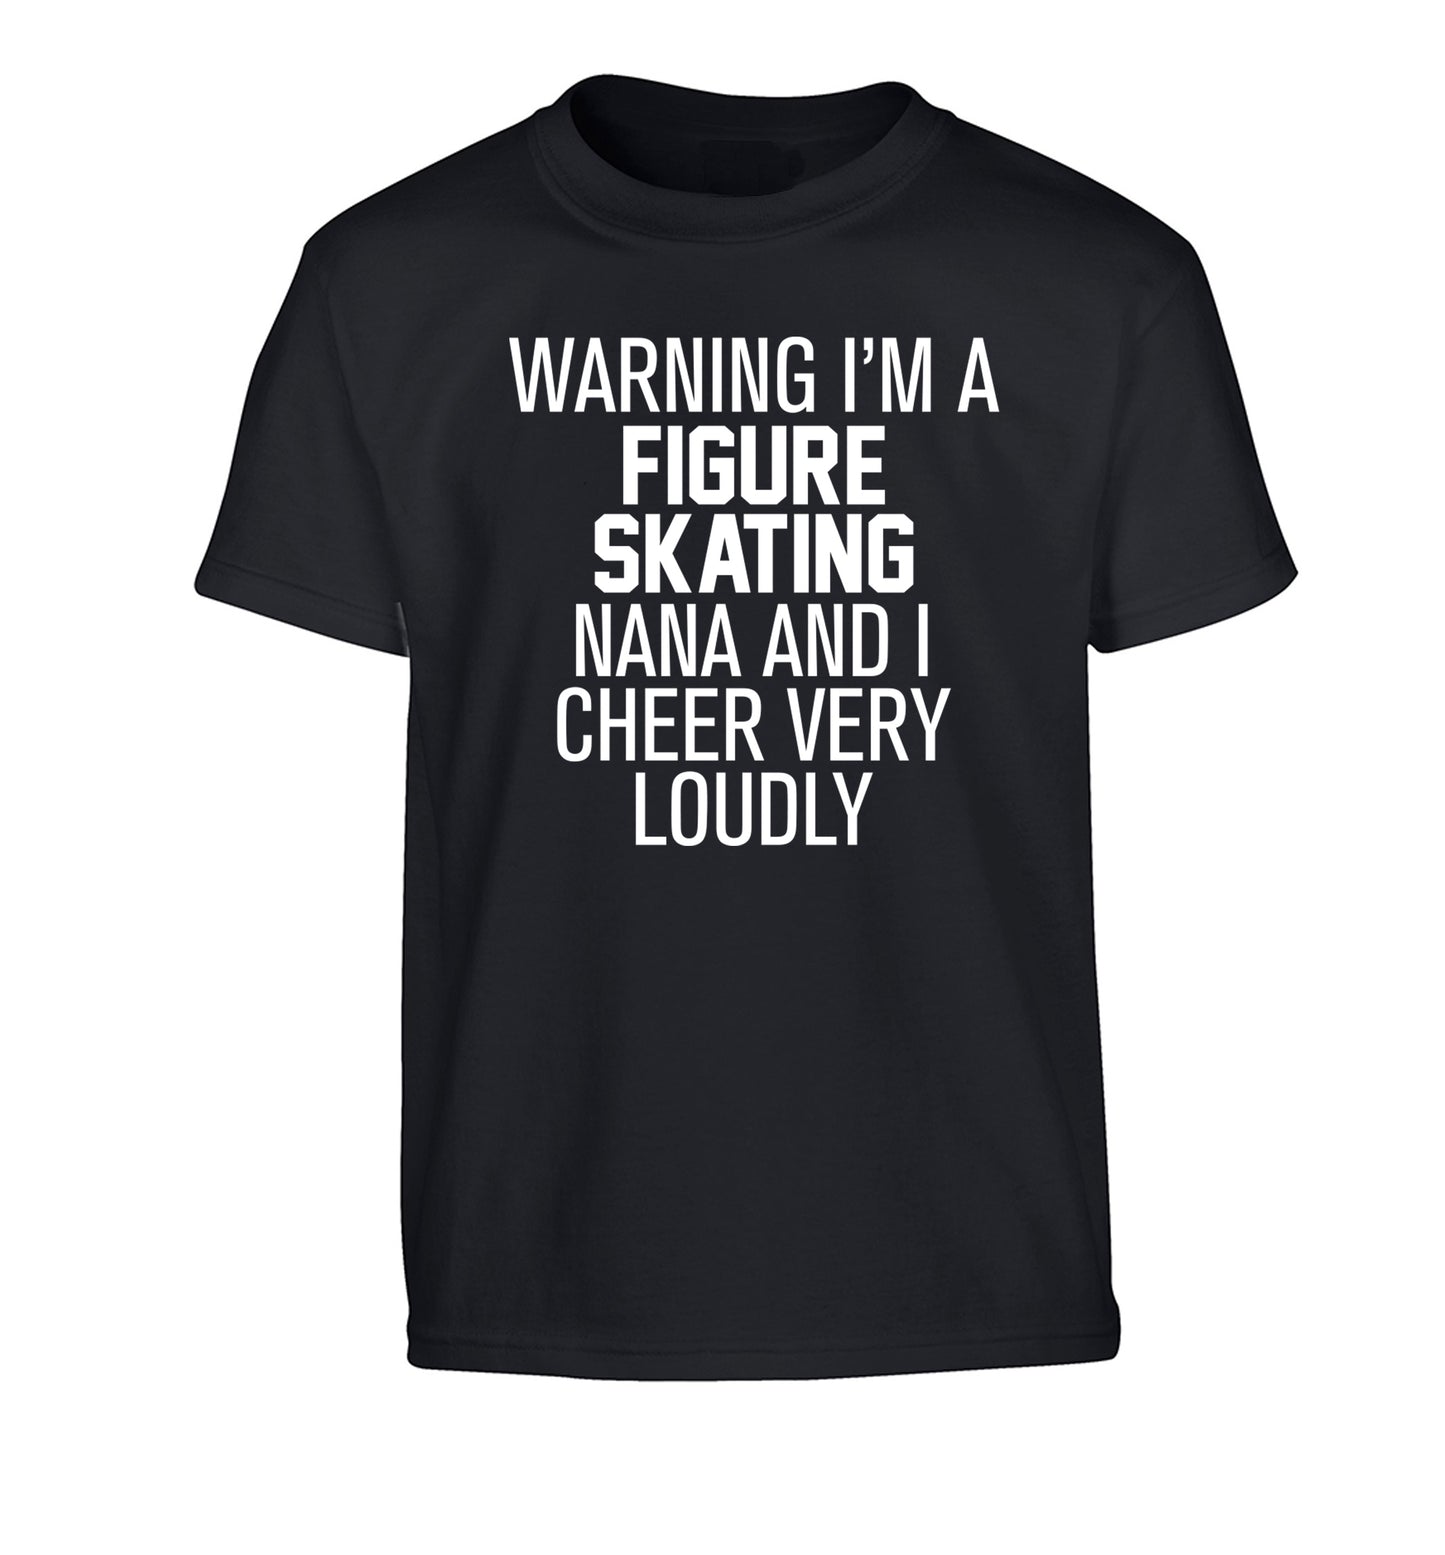 Warning I'm a figure skating nana and I cheer very loudly Children's black Tshirt 12-14 Years